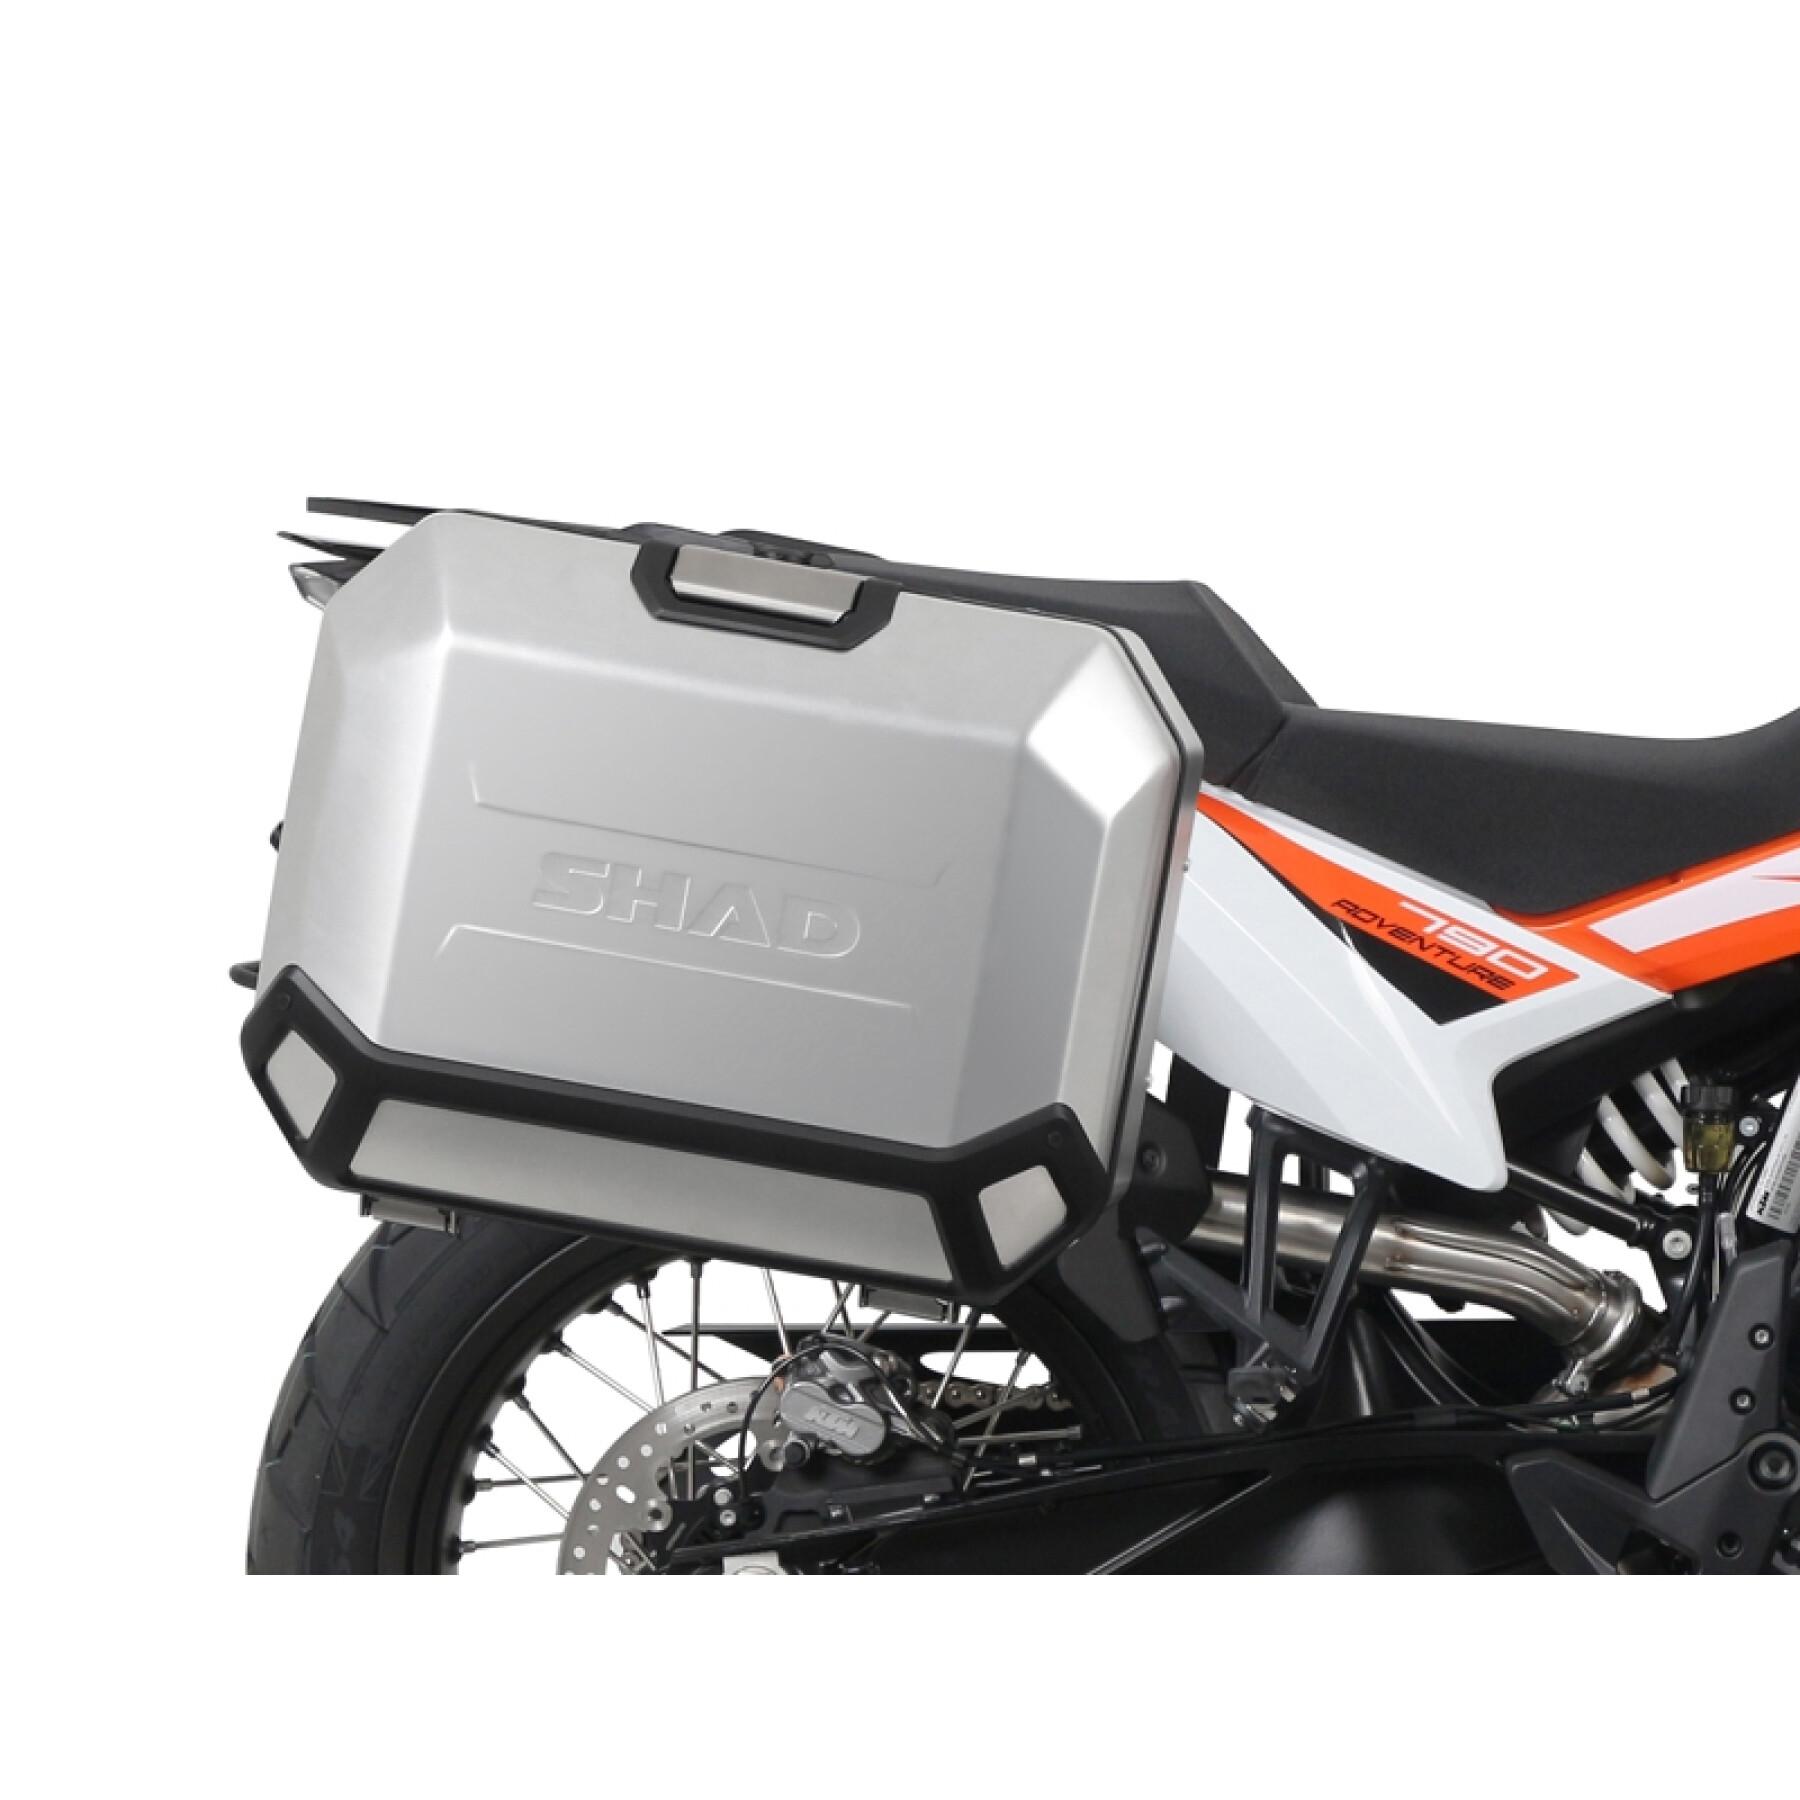 Soporte de la maleta lateral de la moto Shad 4P System Ktm 790 Adventure 2019-2020